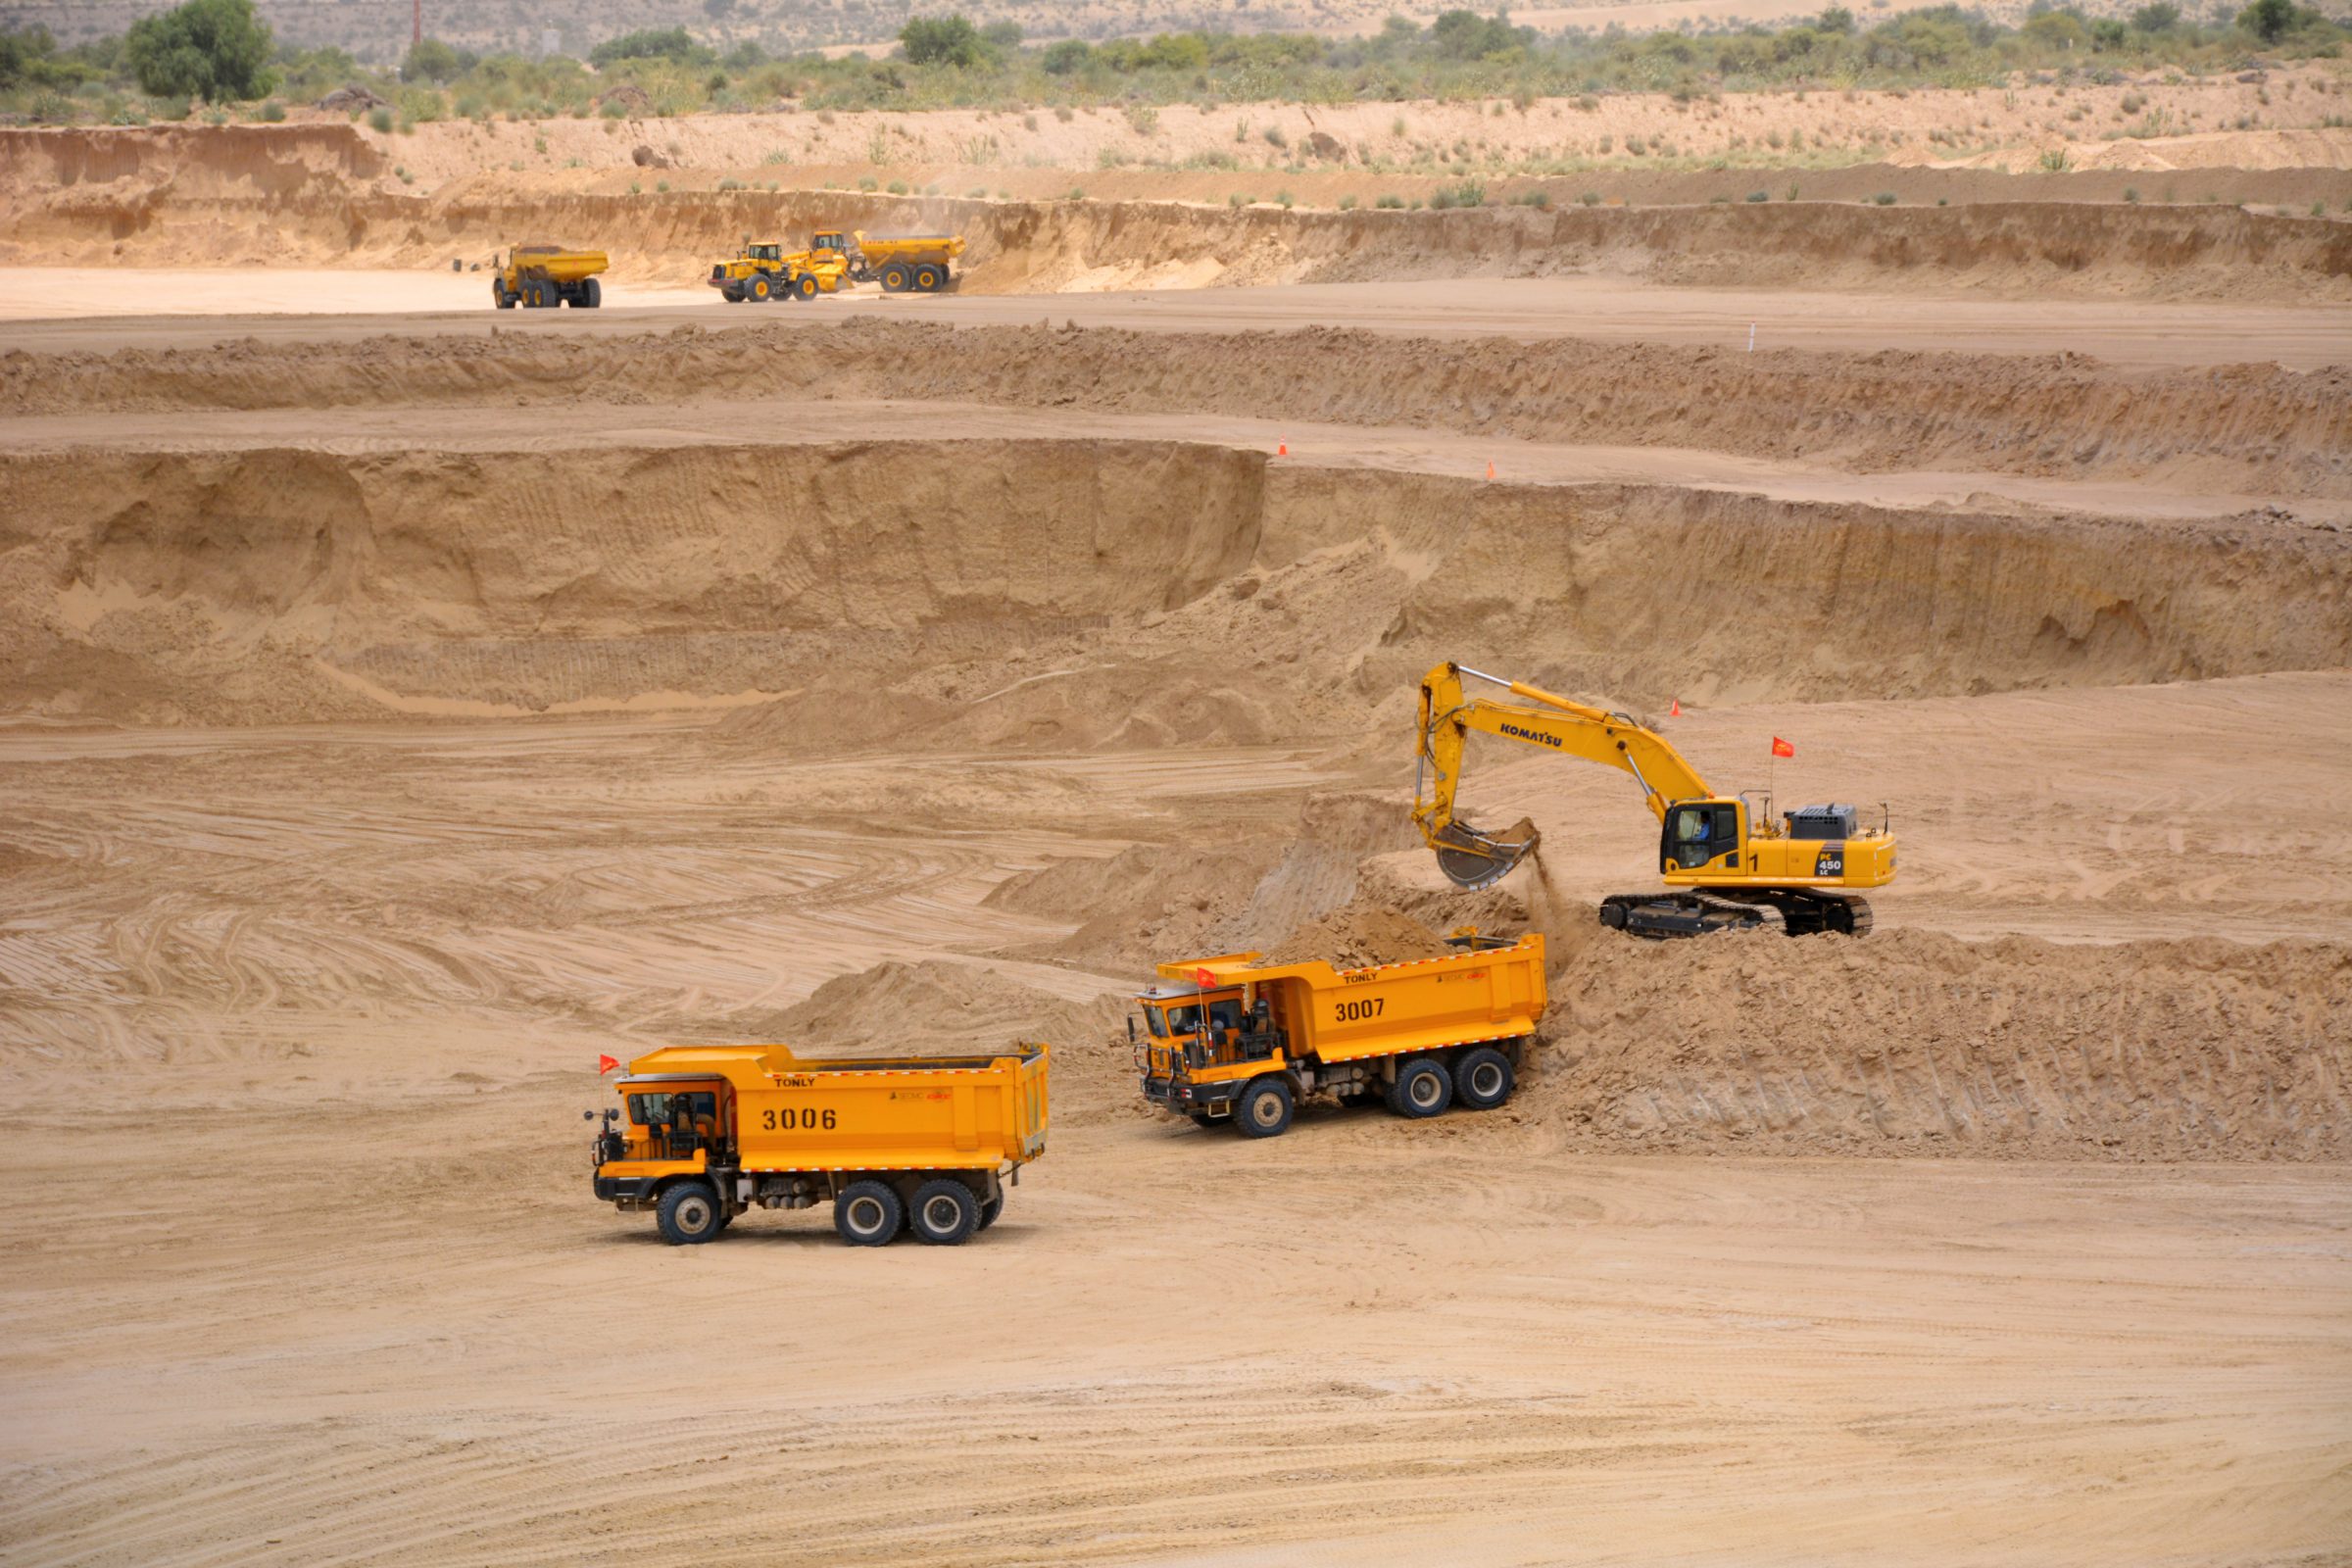 3 orange trucks coal mining in Thar desert, Pakistan